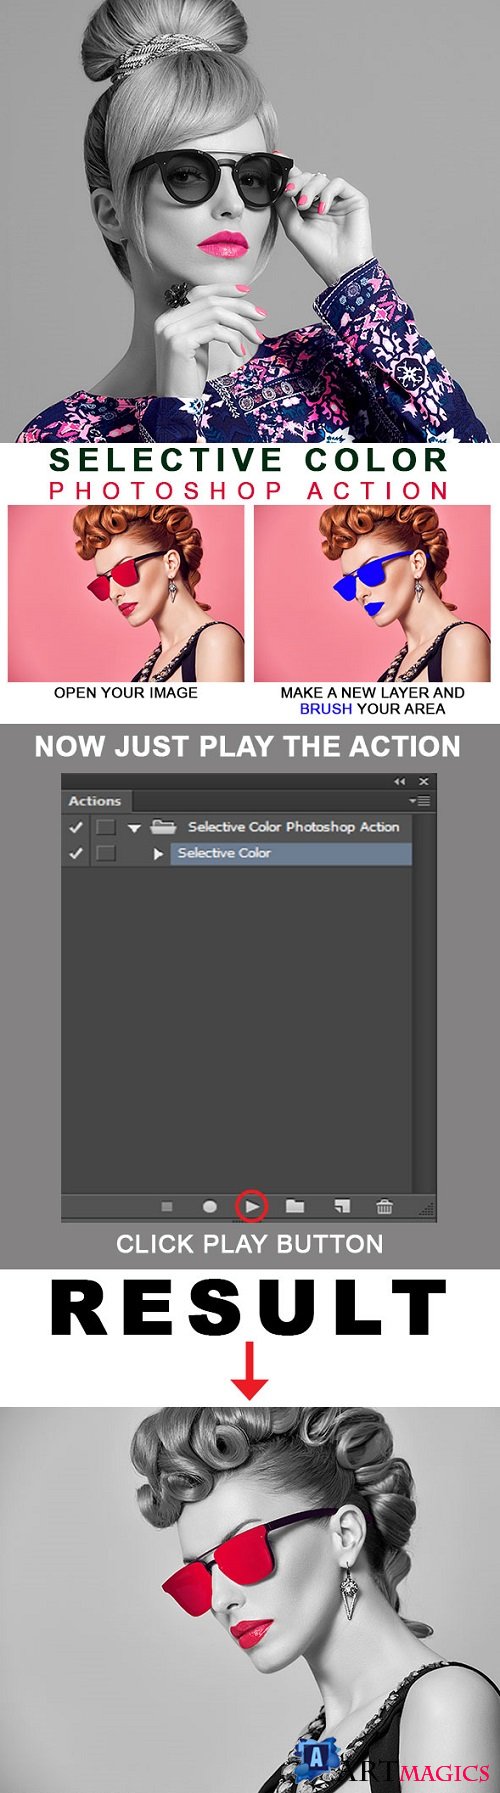 Selective Color Photoshop Action 21492525